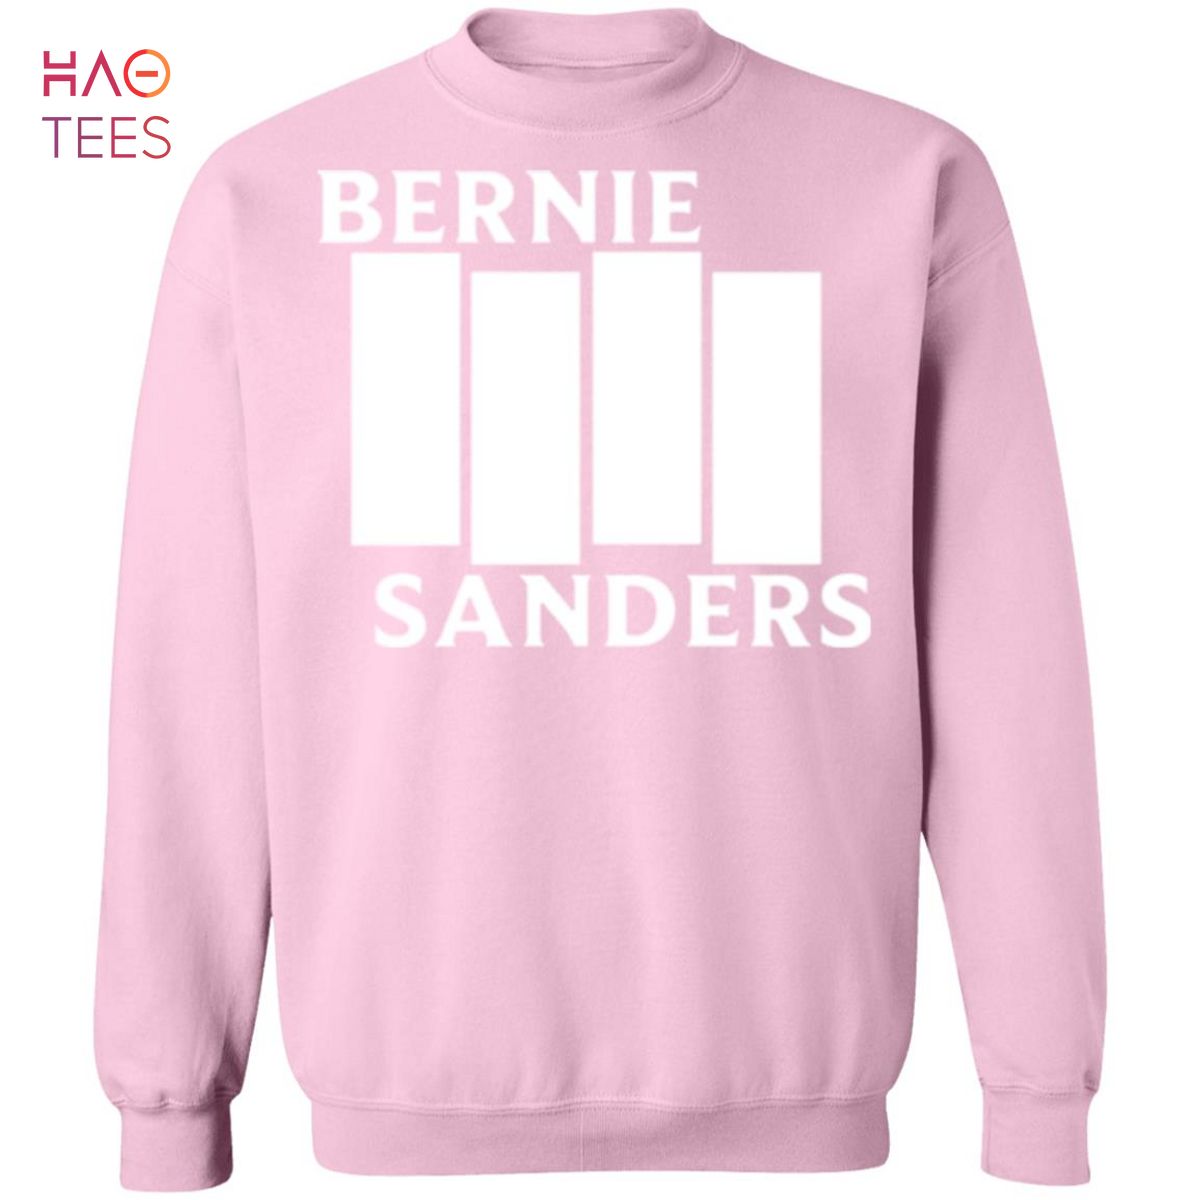 BEST Bernie Sanders Black Flag Sweater White